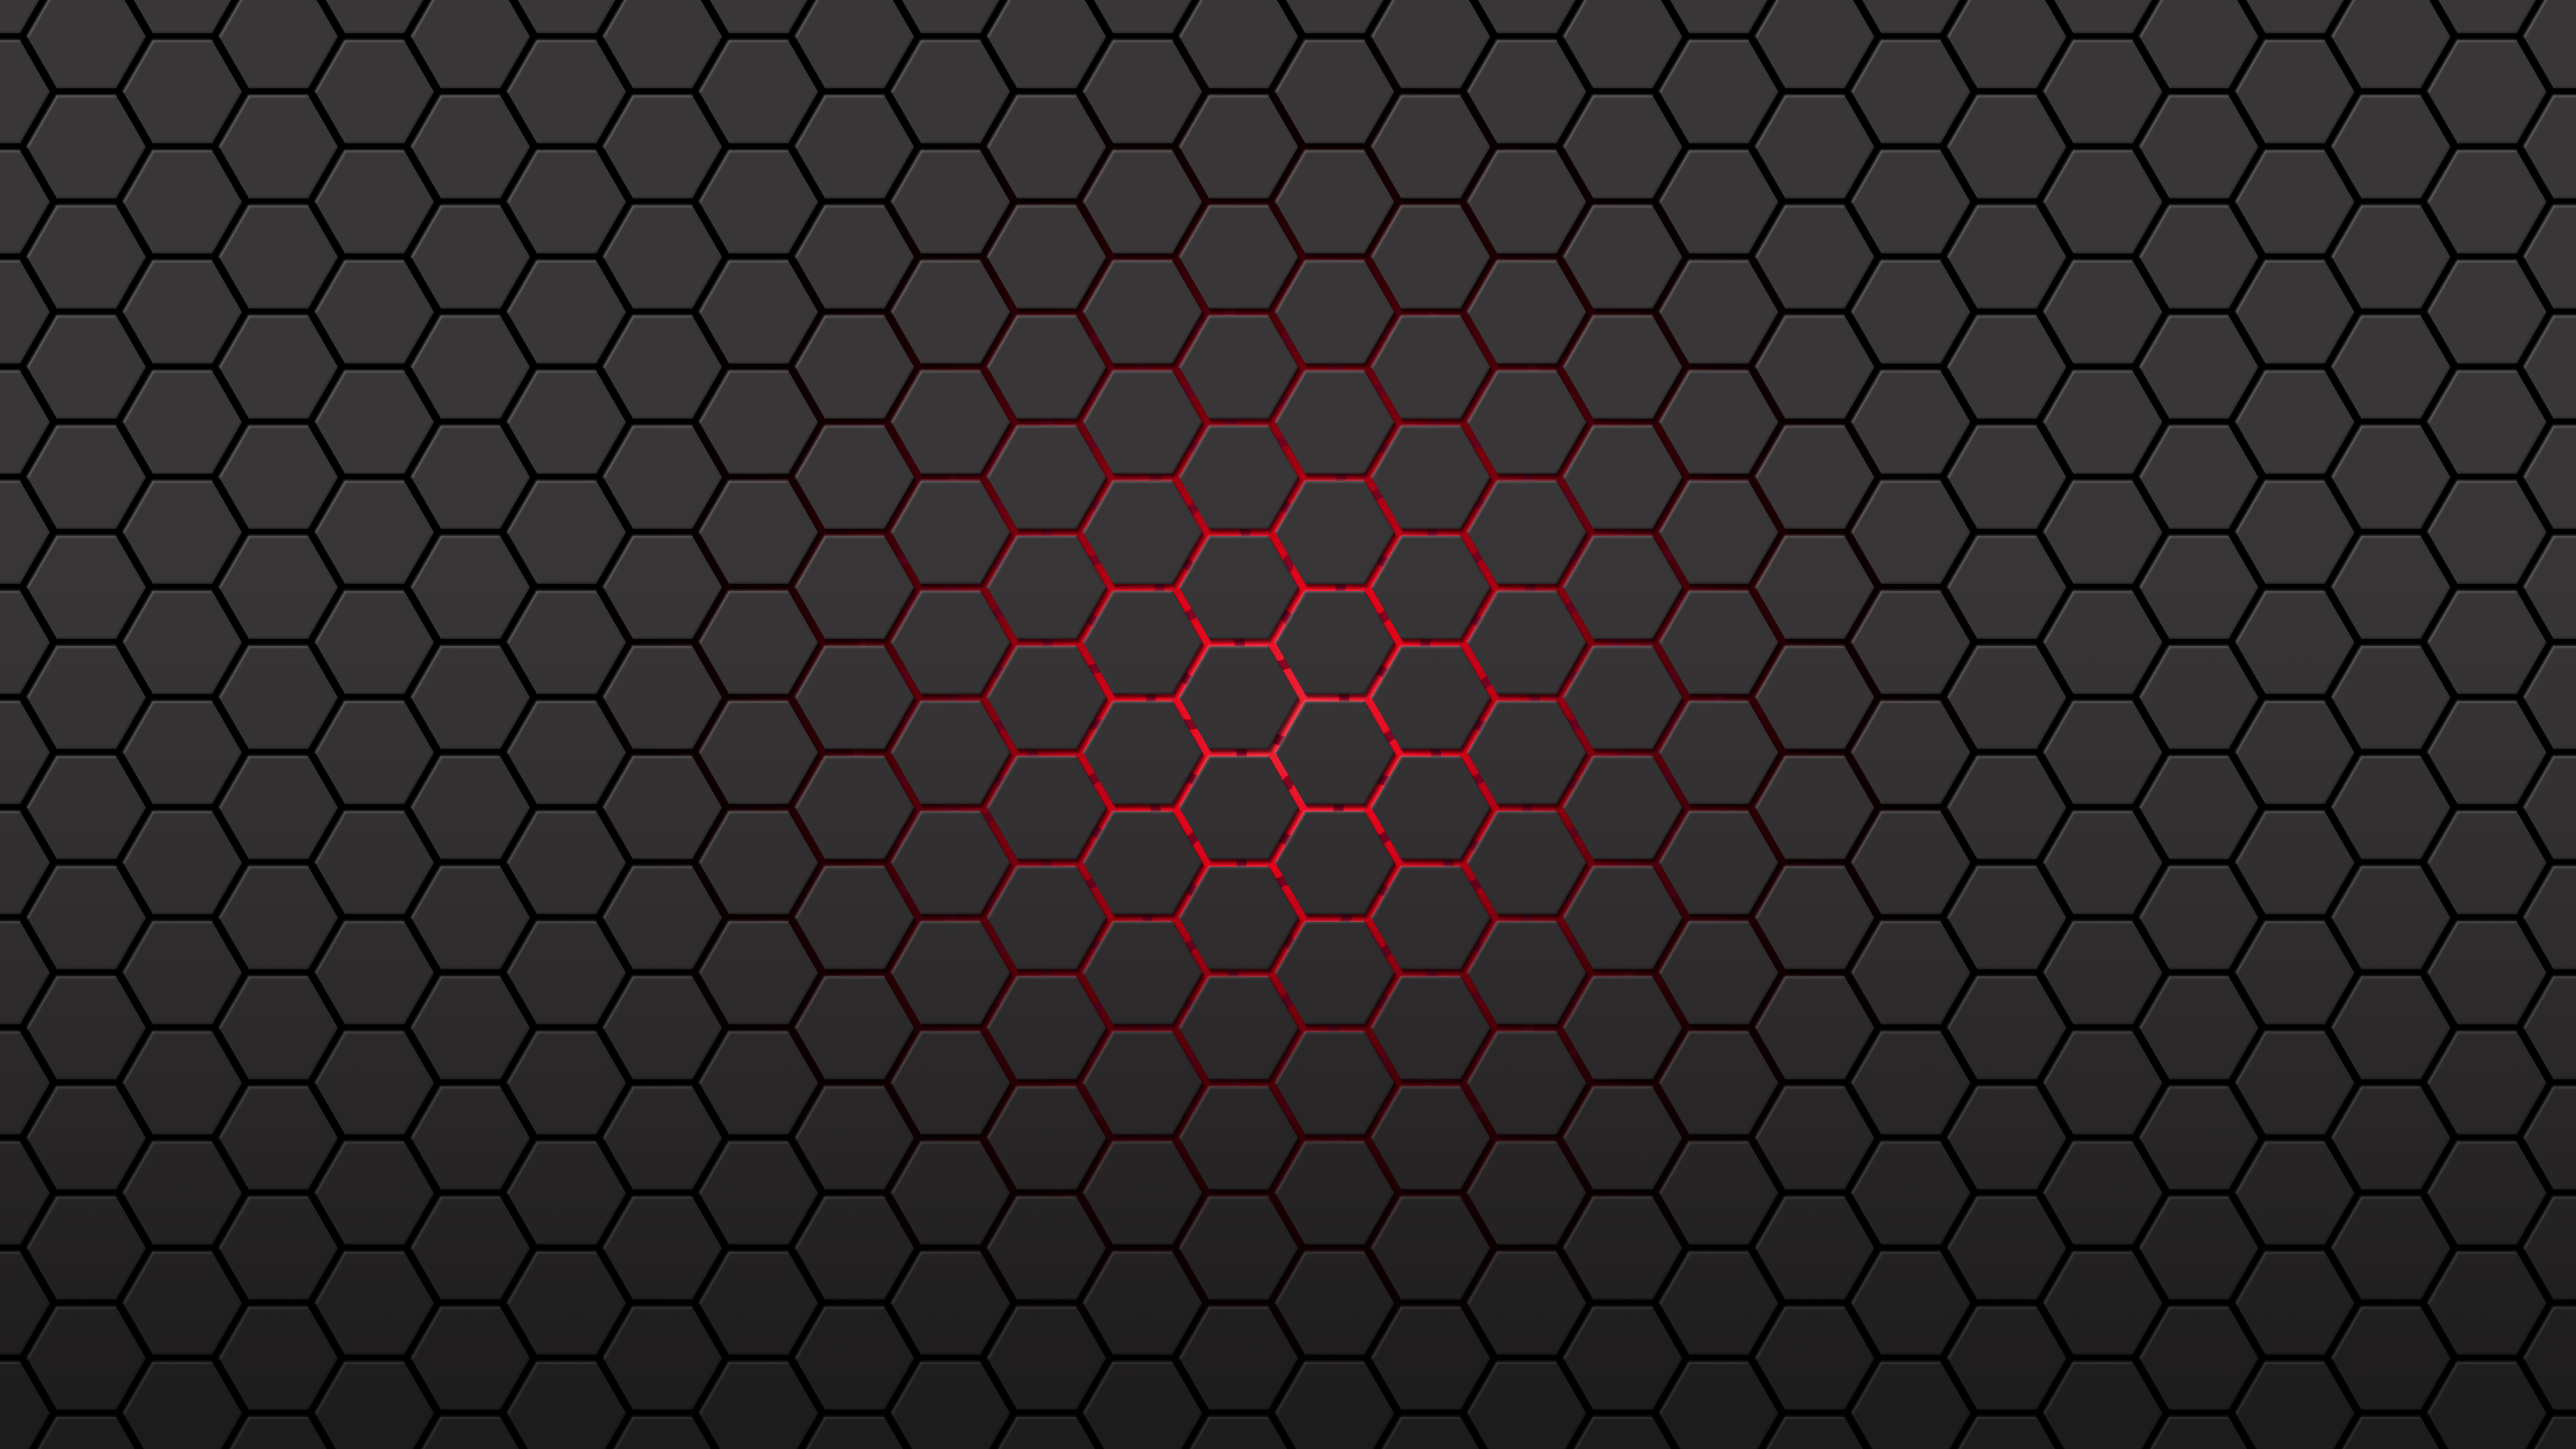 Cool Hexagon Wallpapers - Top Free Cool Hexagon Backgrounds ...